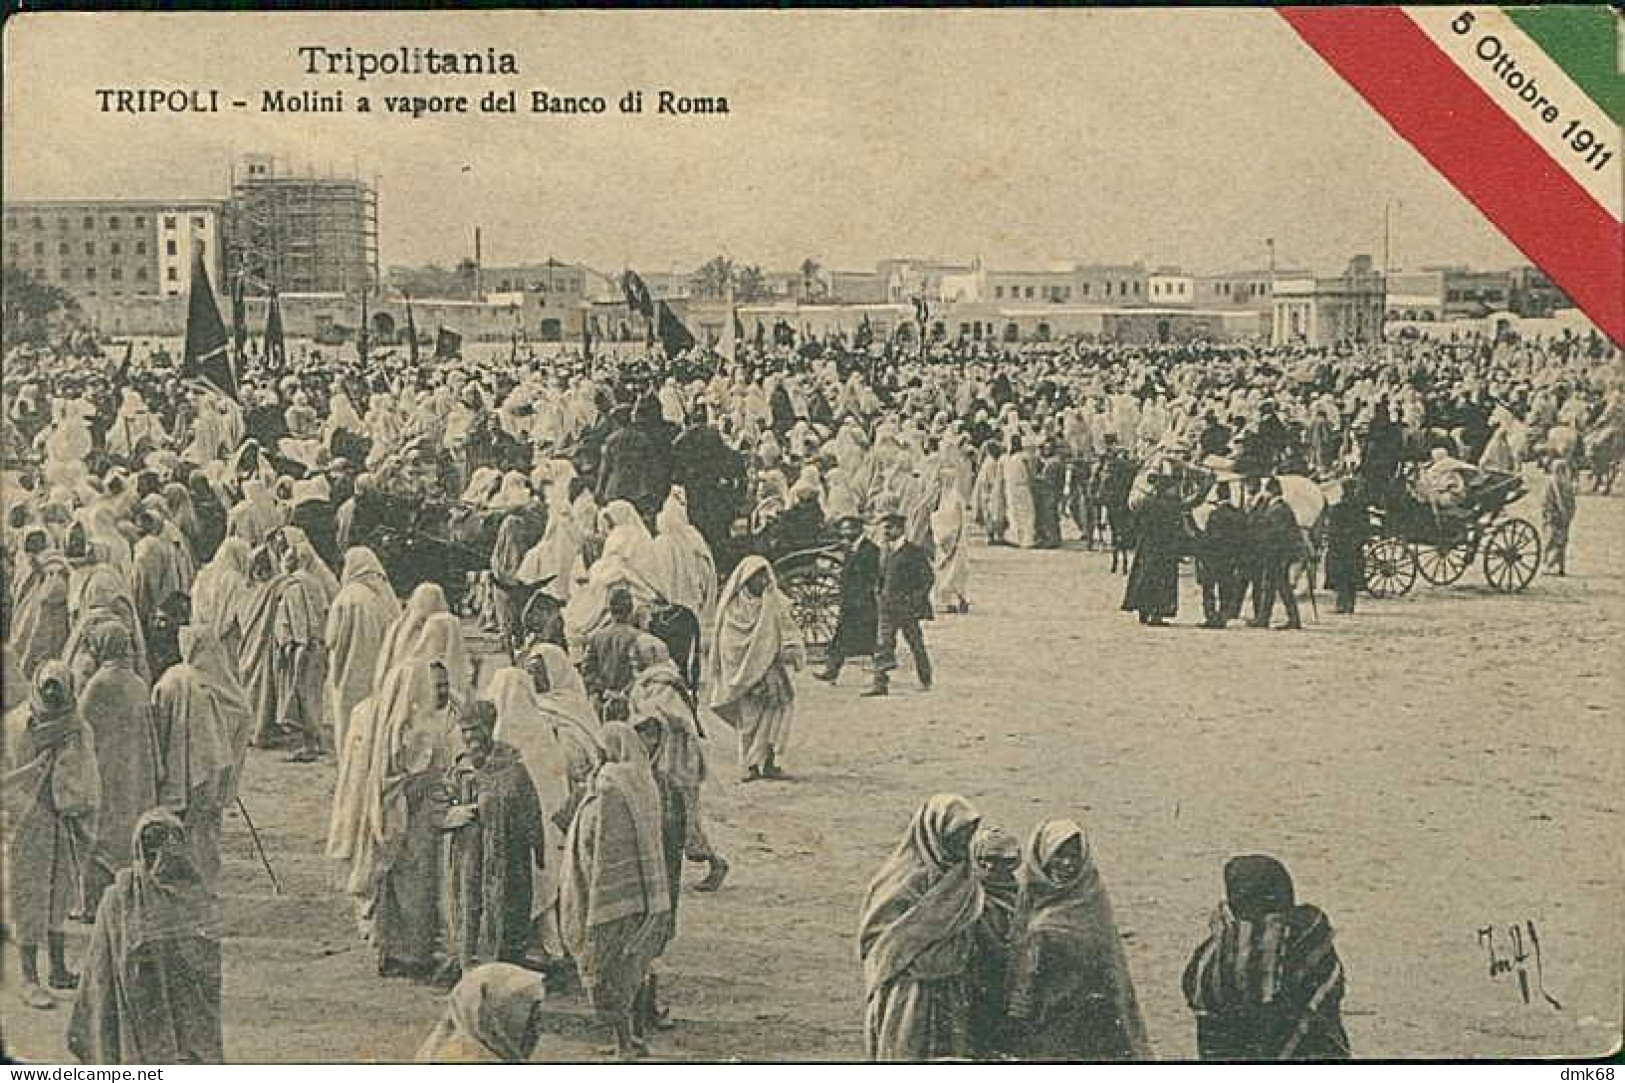 LIBYA / LIBIA - TRIPOLI - MOLINI A VAPORE DEL BANCO DI ROMA - EDIZ. FUMAGALLI - 5 OTT. 1911 (12487/2) - Libya